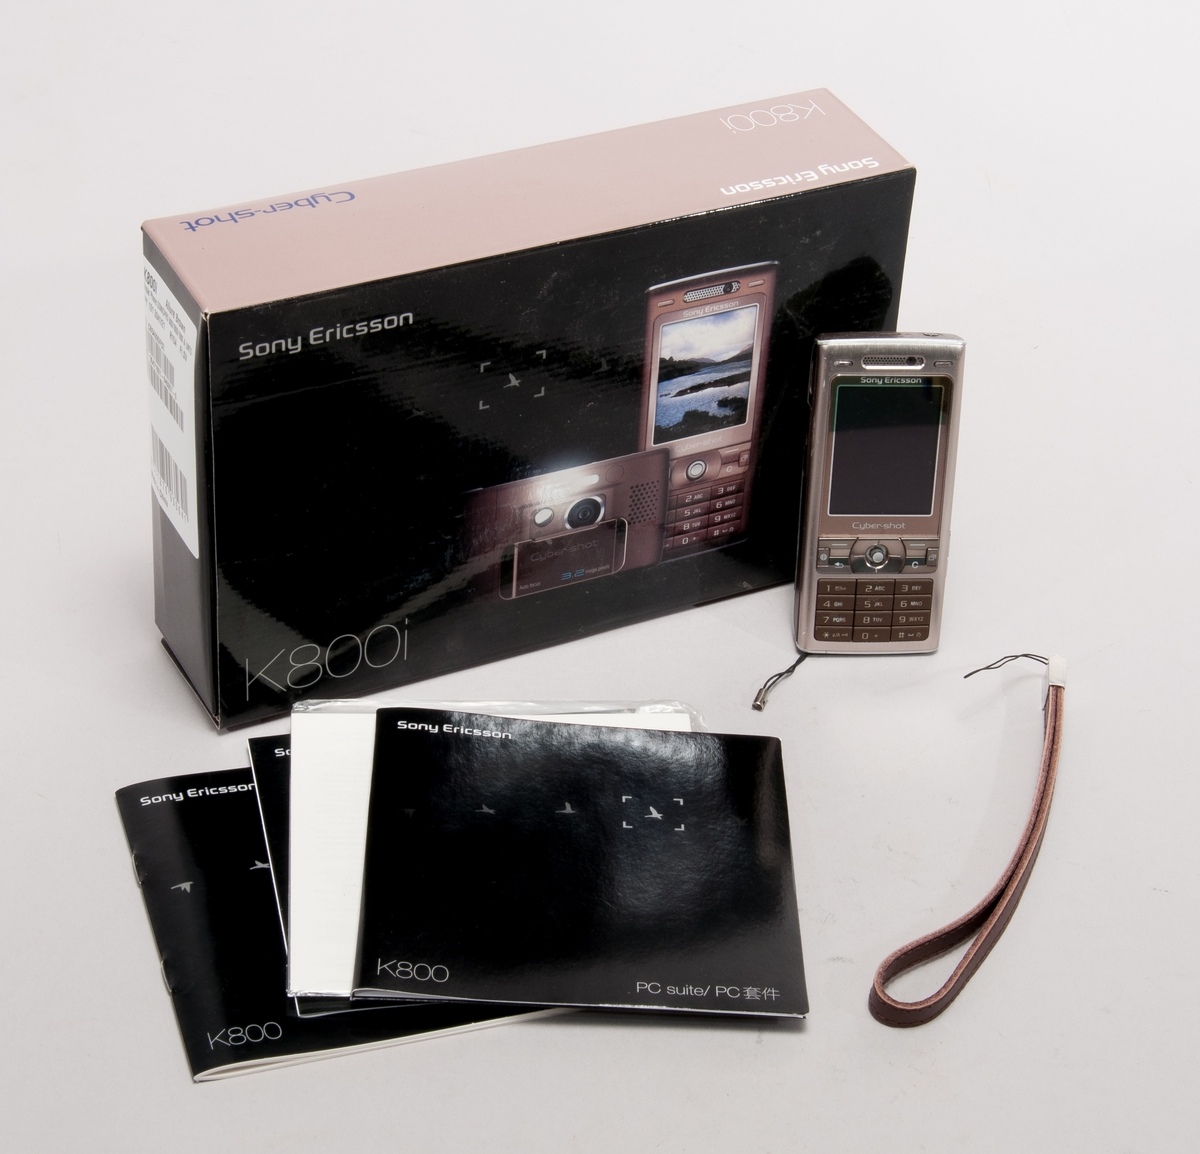 Mobiltelefon i originalförpackning, 

Typ Sony Ericsson Cyber-shot, K800i, 3,2 megapixel kamera.

typbeteckning AAD-3022031
ser.nr CB5A09DFSZ